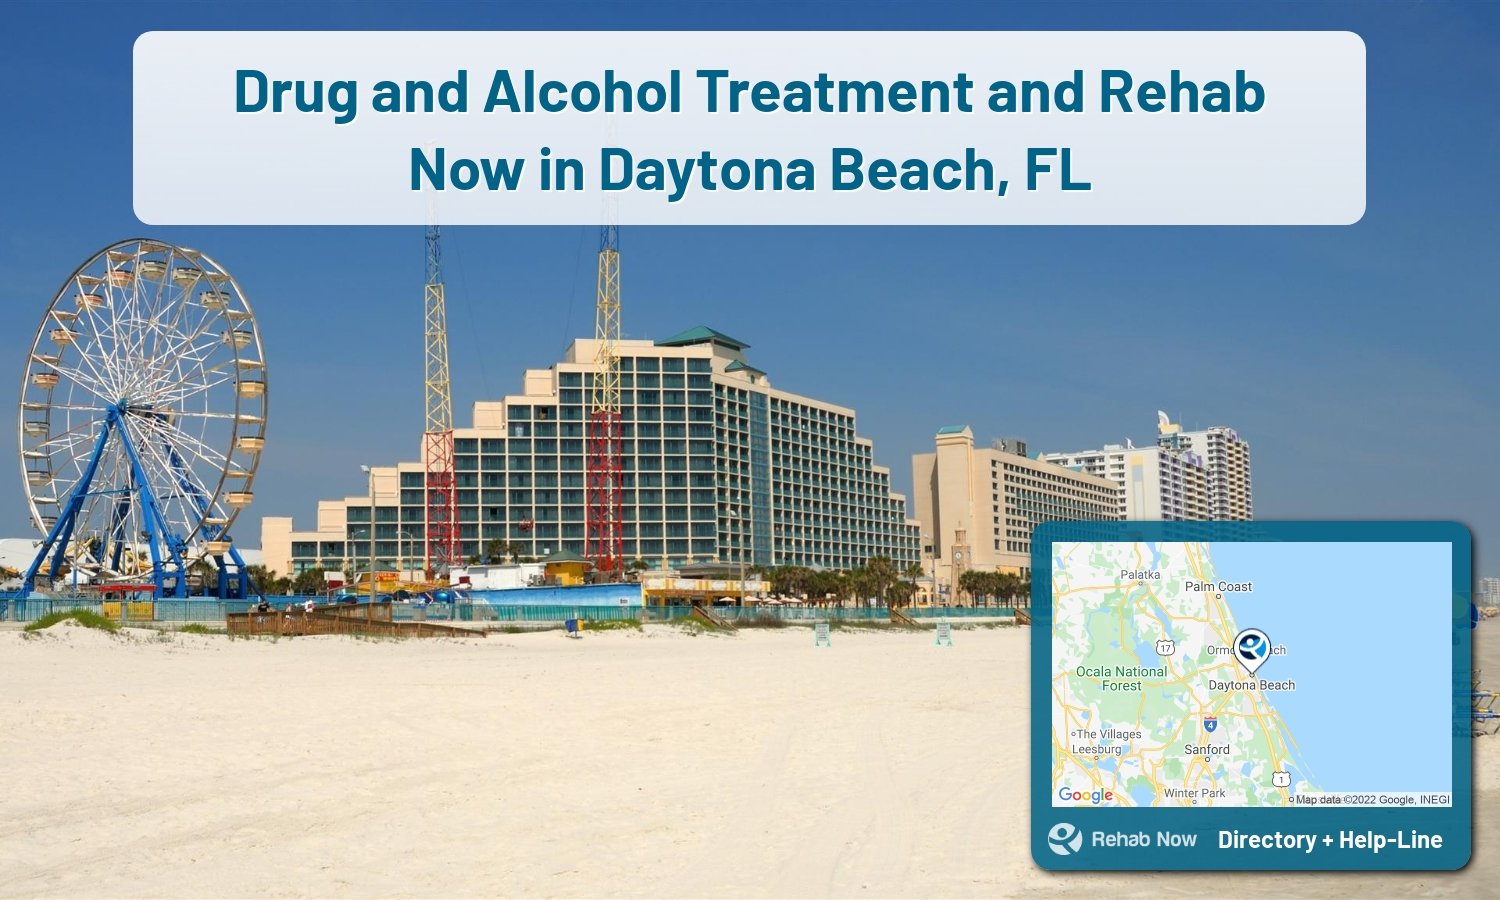 Daytona Beach, FL Treatment Centers. Find drug rehab in Daytona Beach, Florida, or detox and treatment programs. Get the right help now!